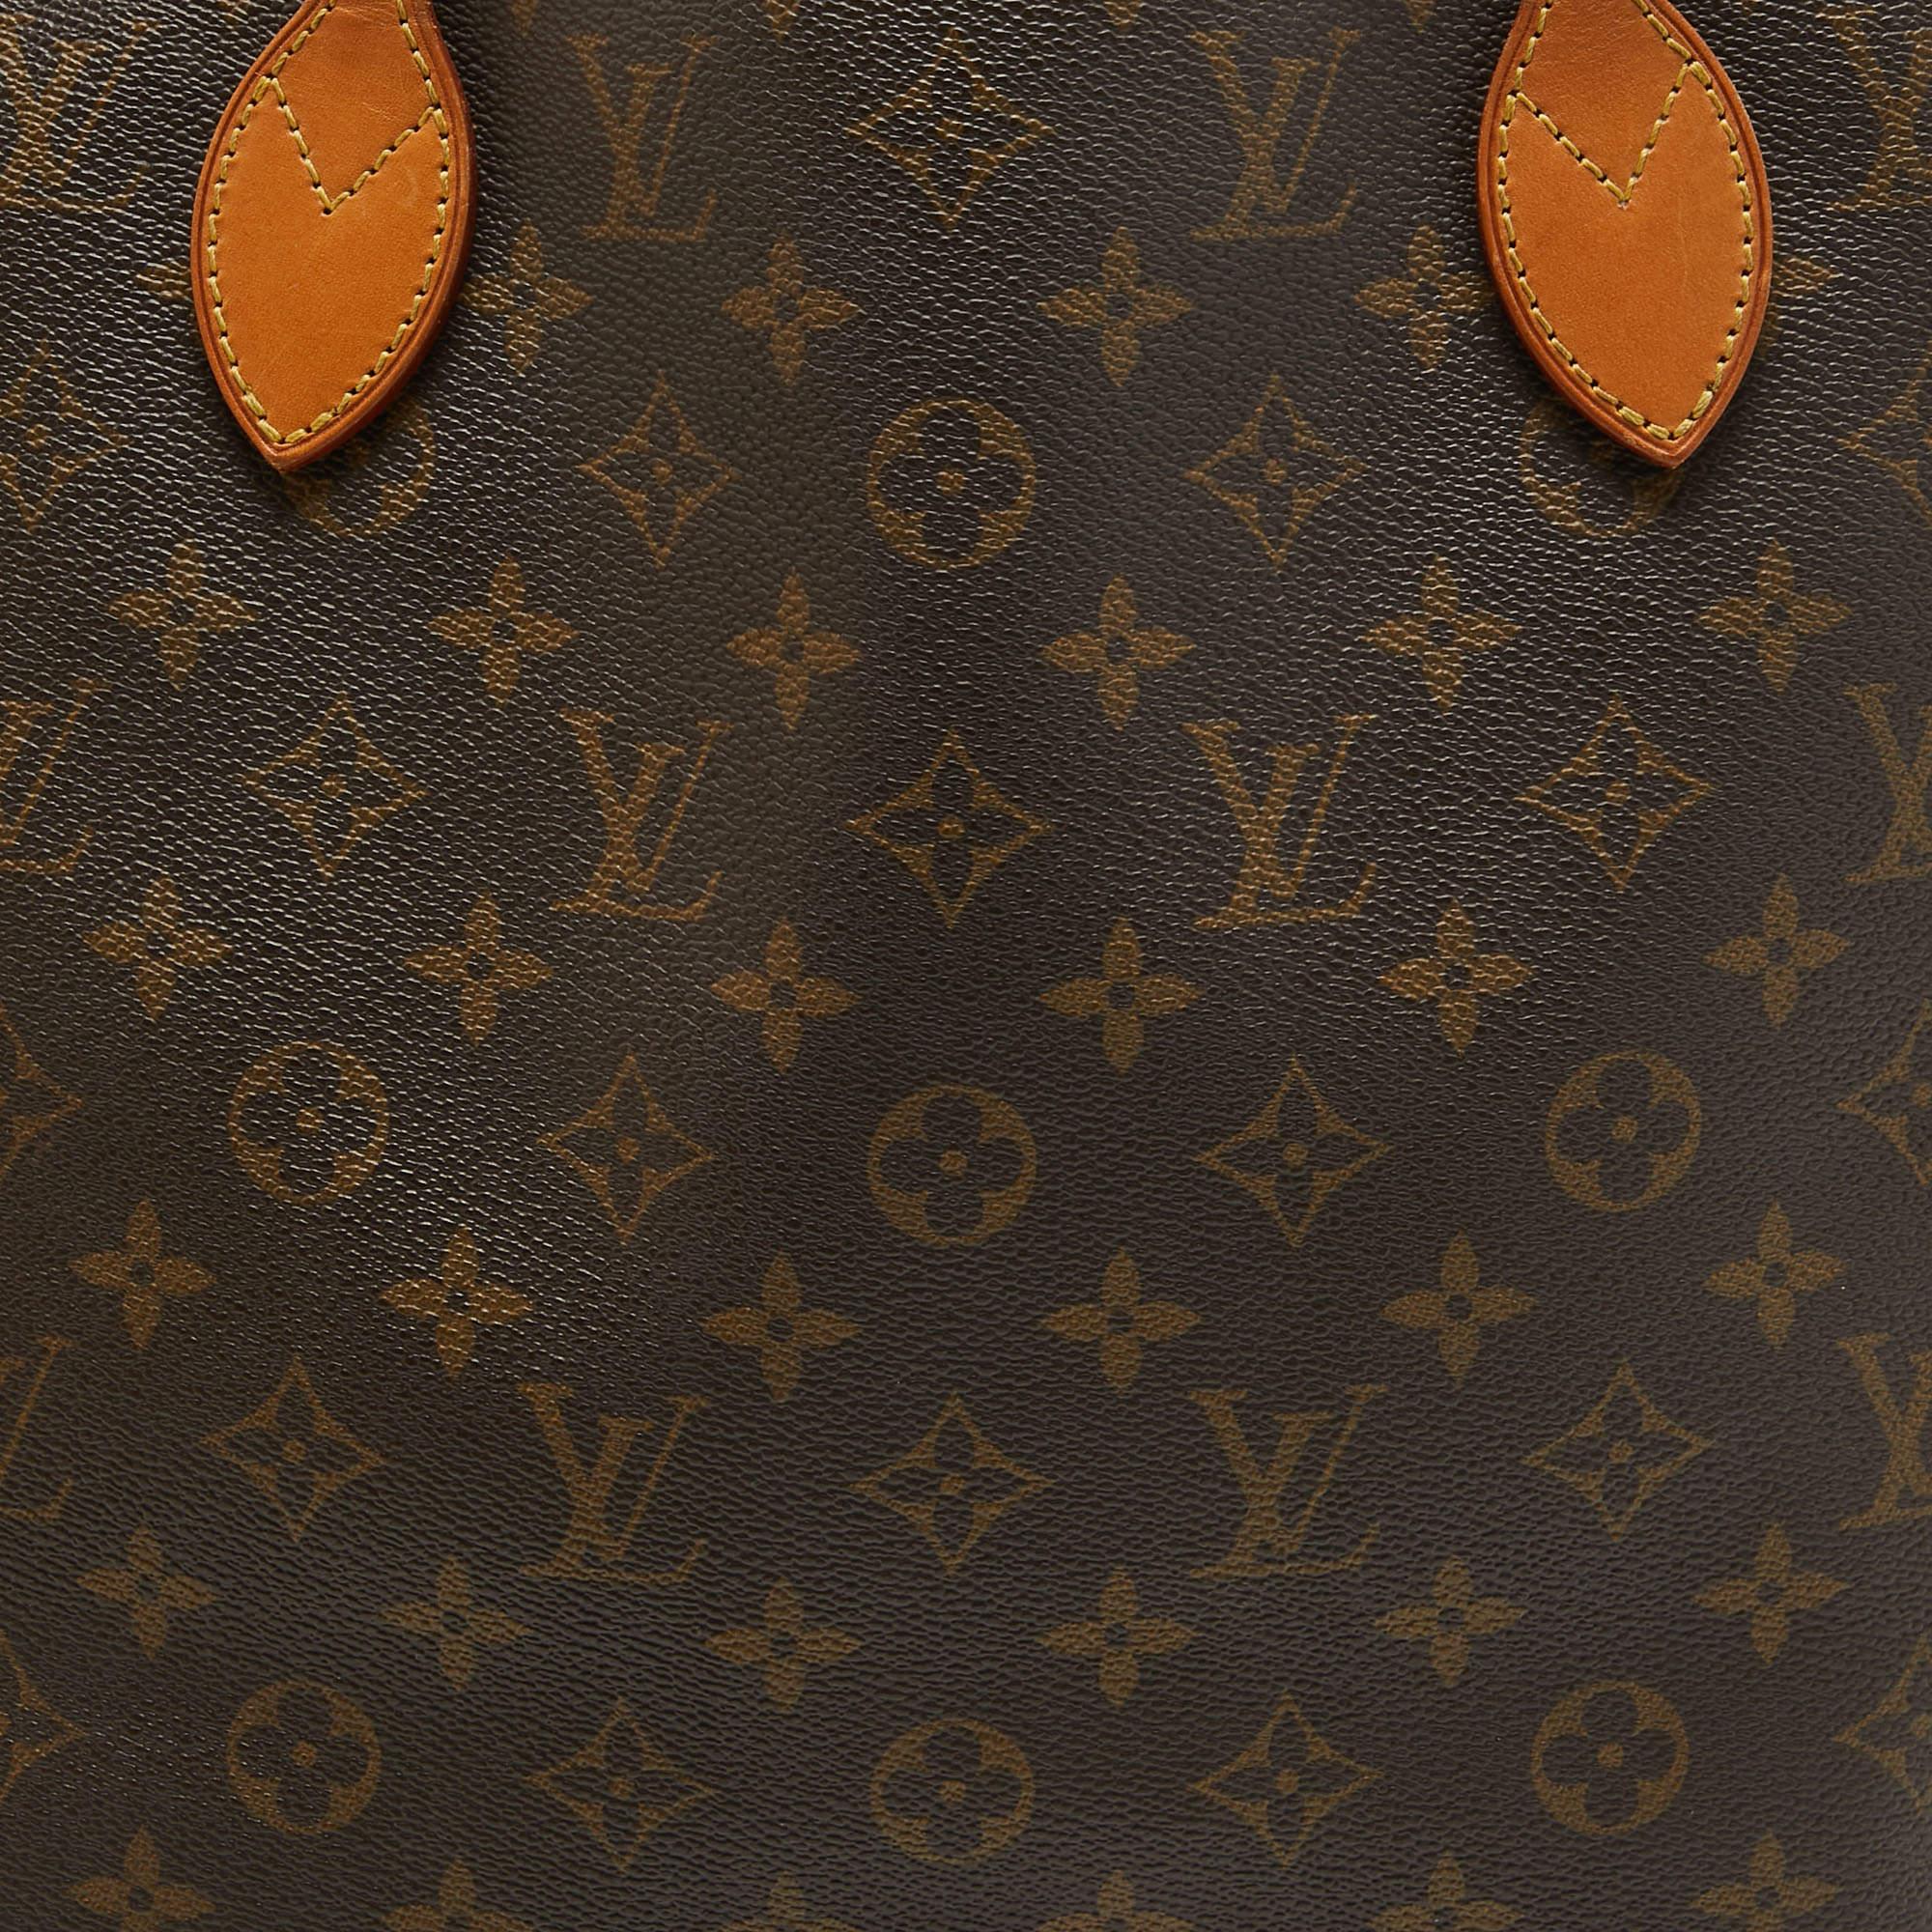 Louis Vuitton Monogram Canvas Neverfull MM Bag For Sale 3